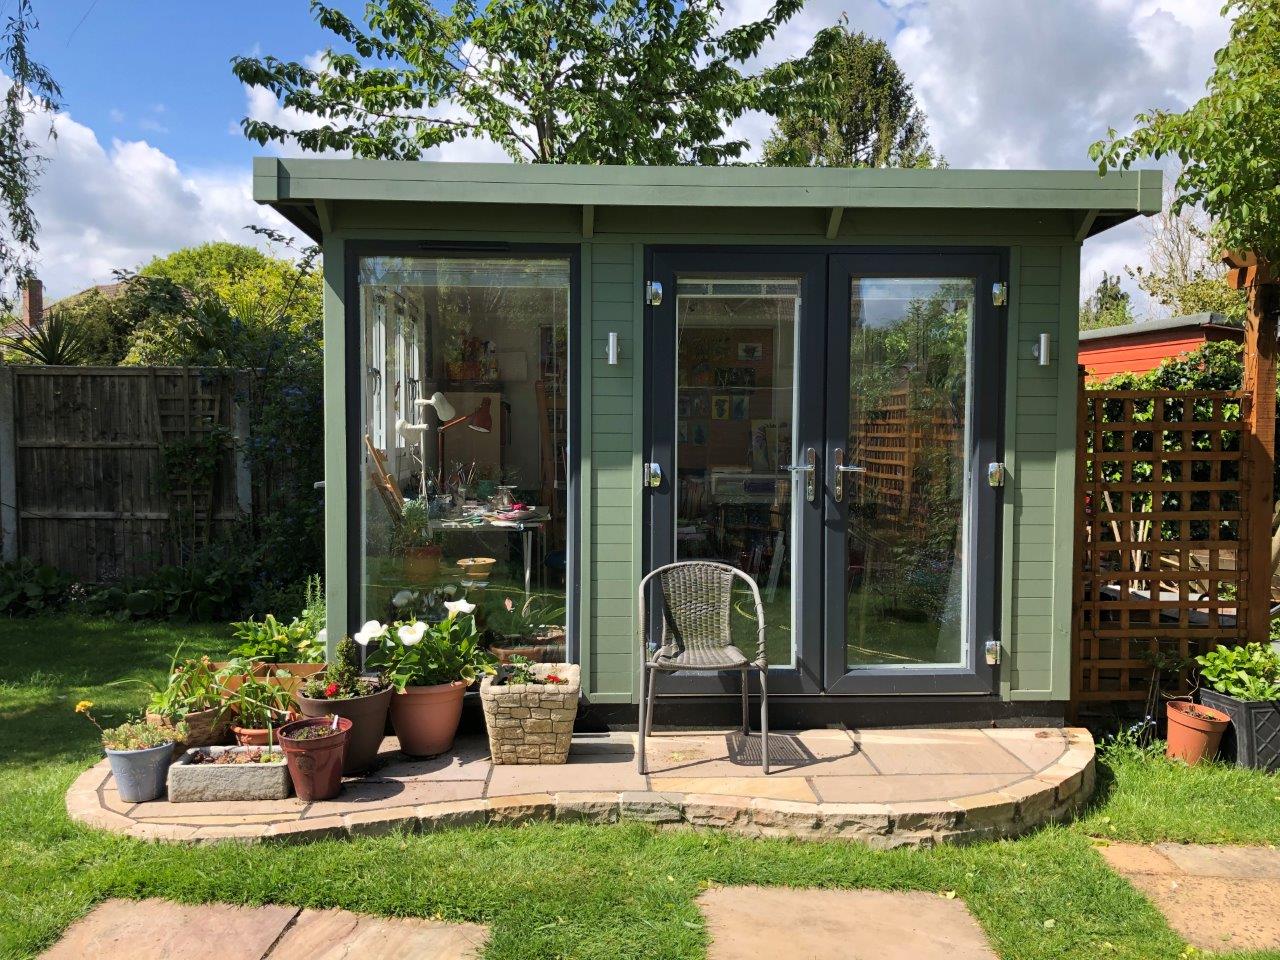 Garden studio with small patio outside.